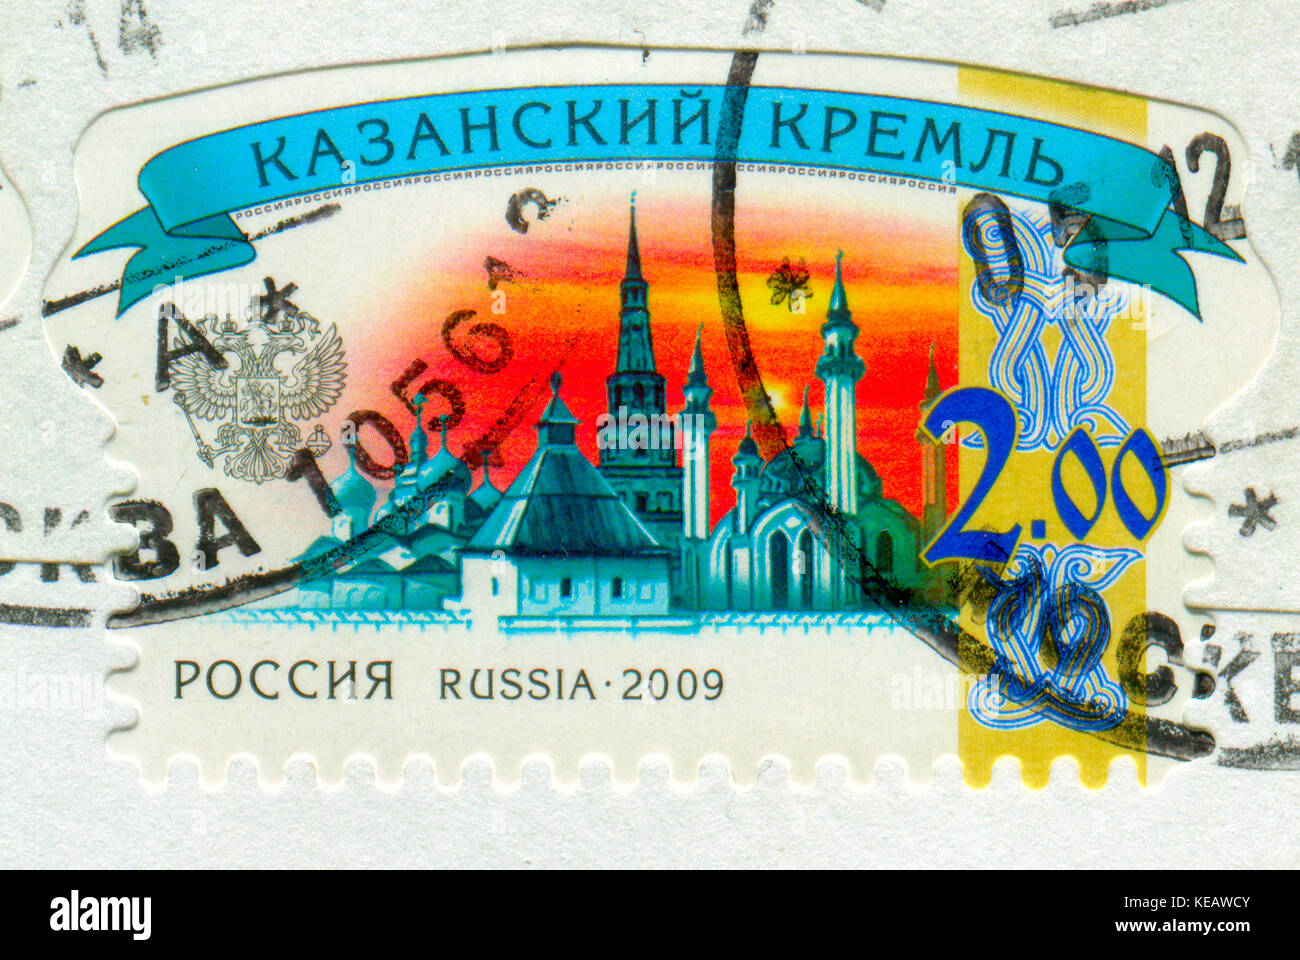 GOMEL, BÉLARUS, 13 octobre 2017, de timbres en Russie montre libre du Kremlin de Kazan, vers 2009. Banque D'Images